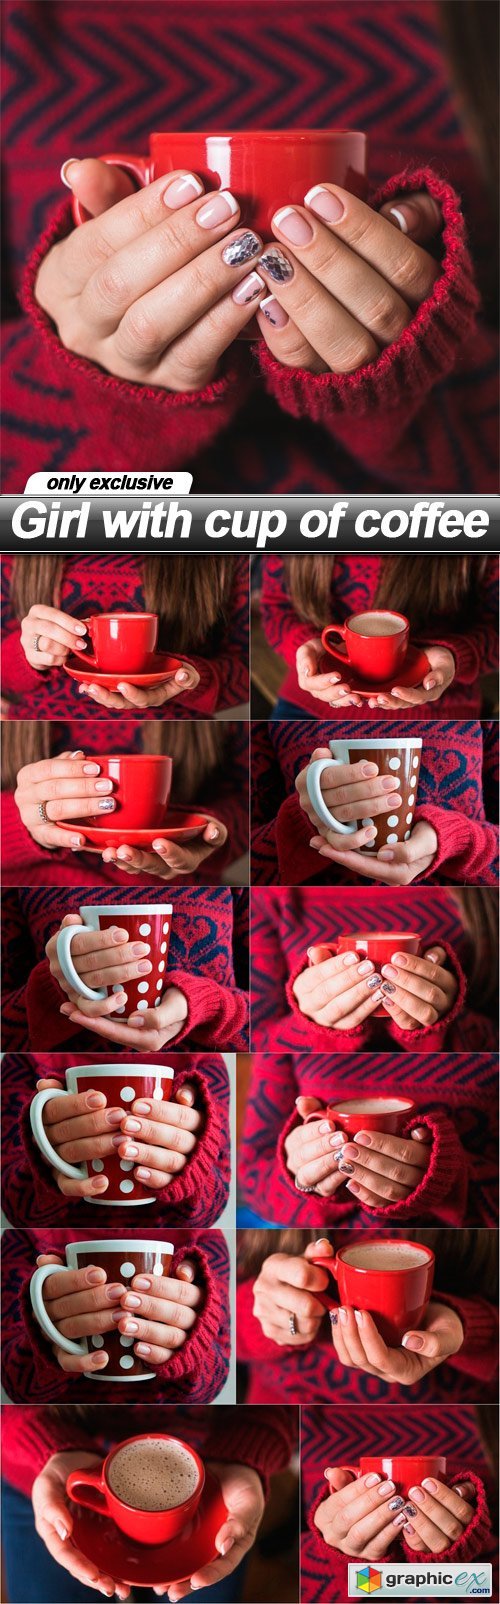 Girl with cup of coffee - 12 UHQ JPEG